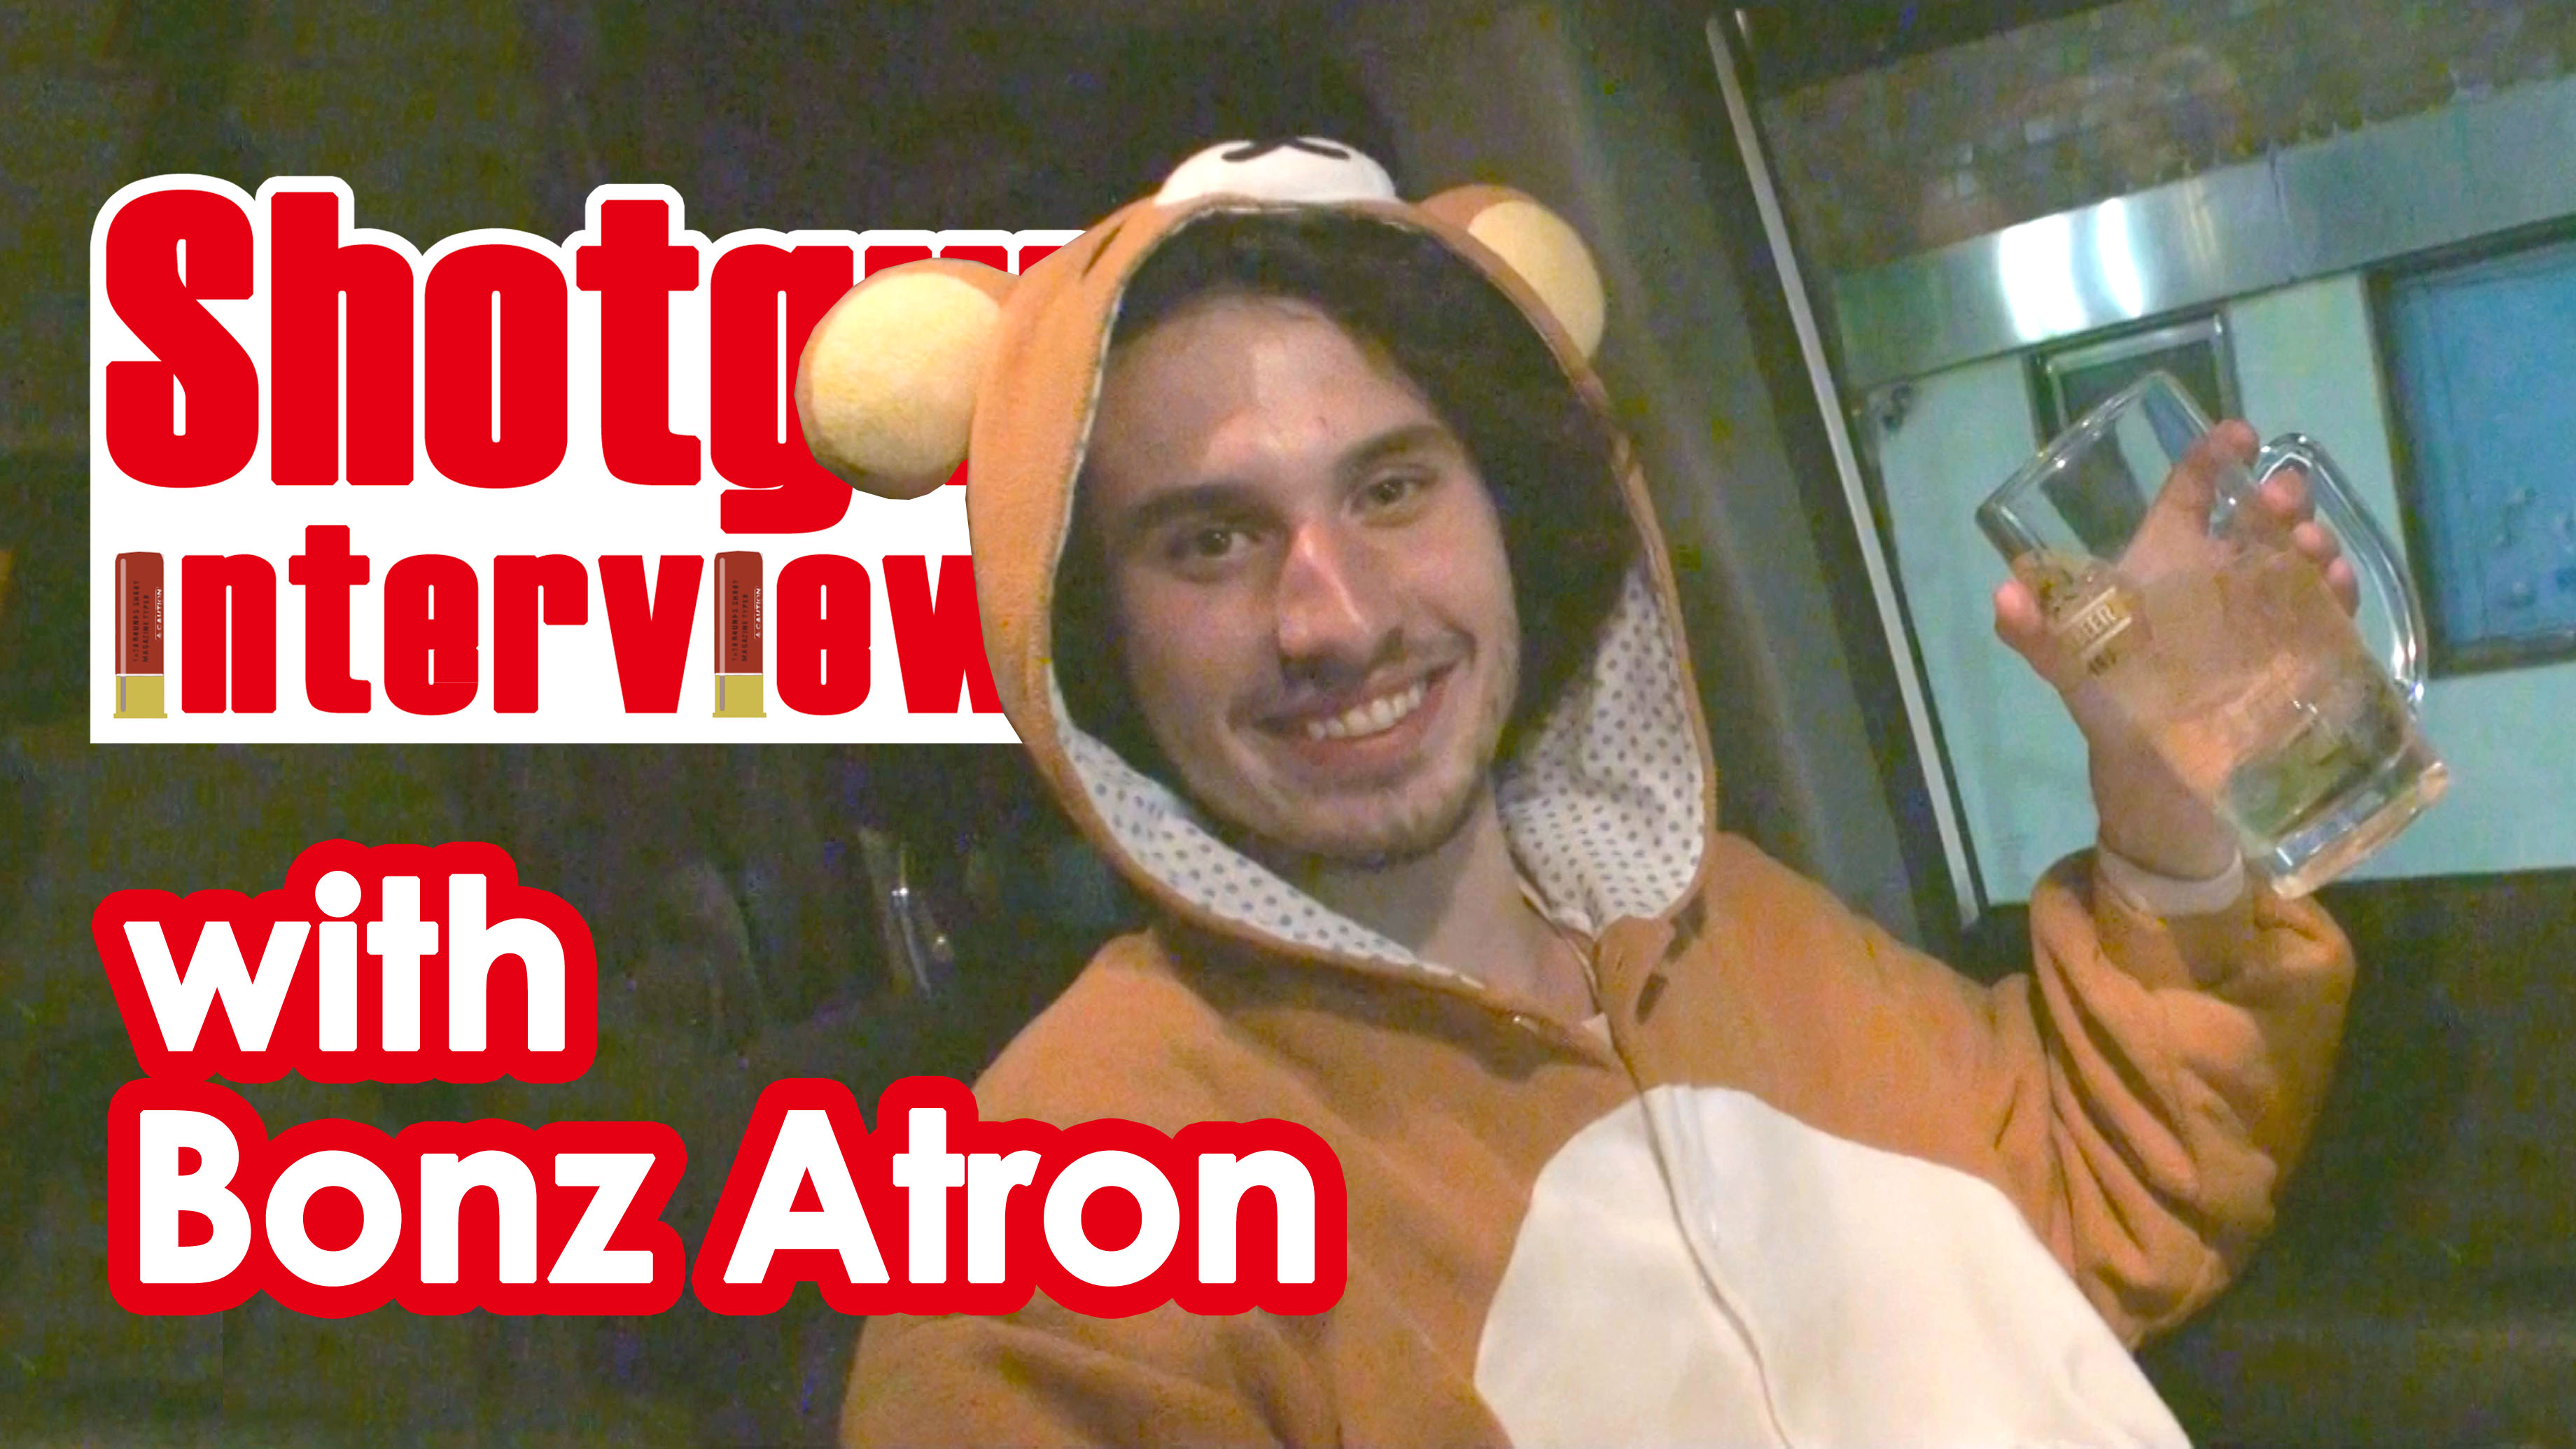 An interview with Bonz Atron